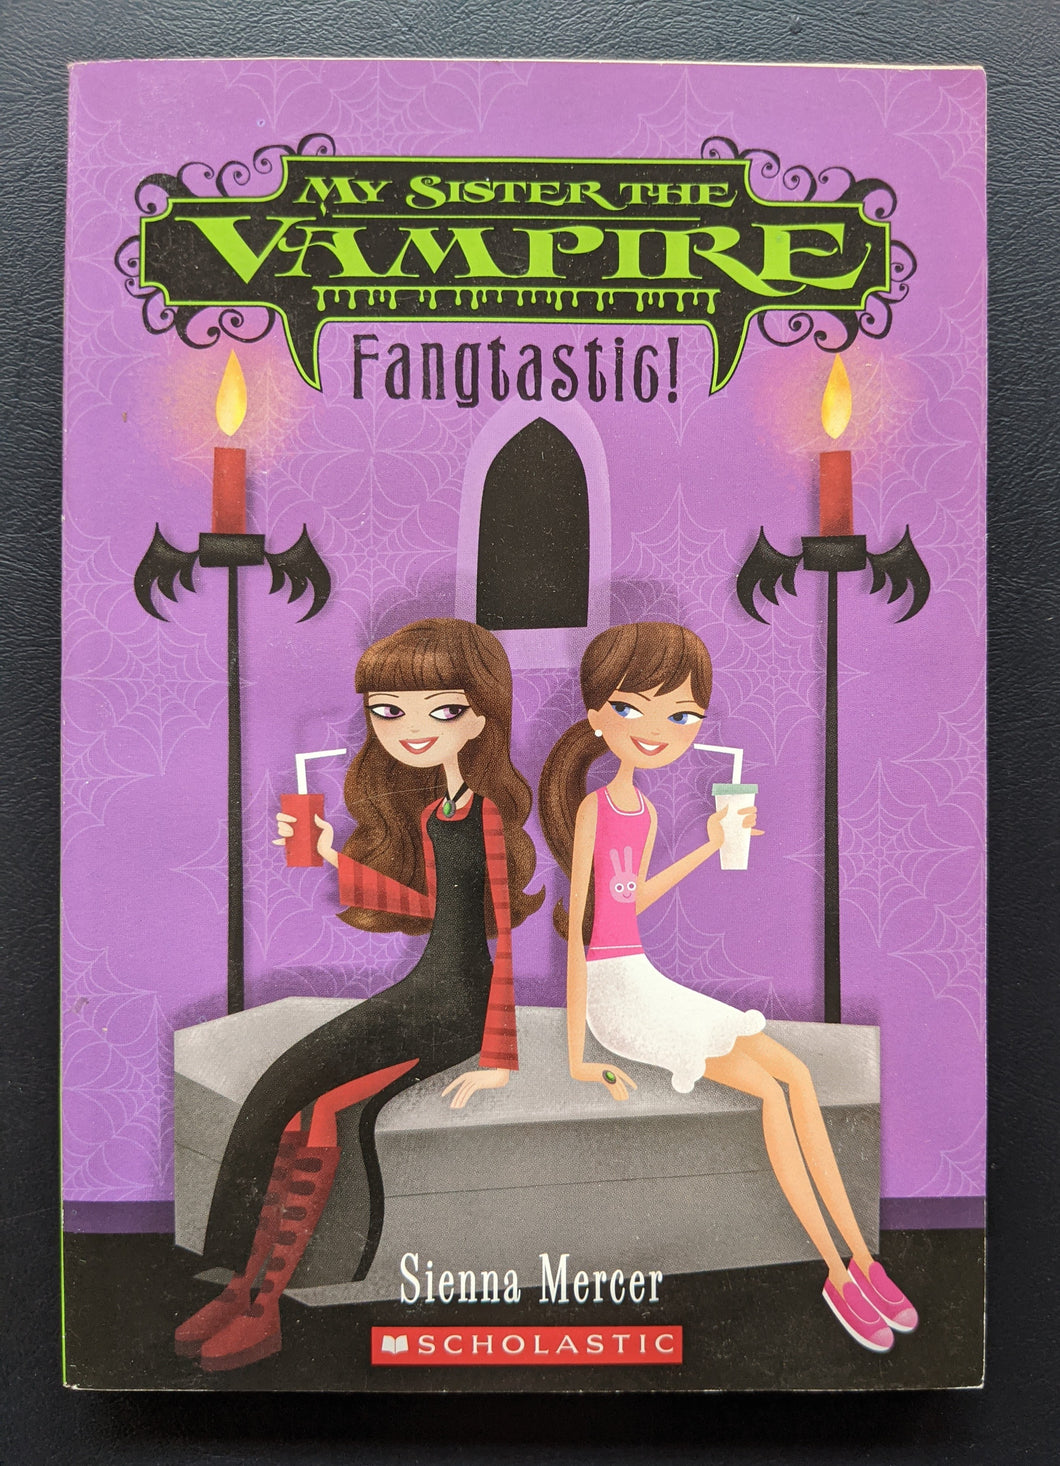 Fantastic! (My Sister the Vampire #2) by Sienna Mercer